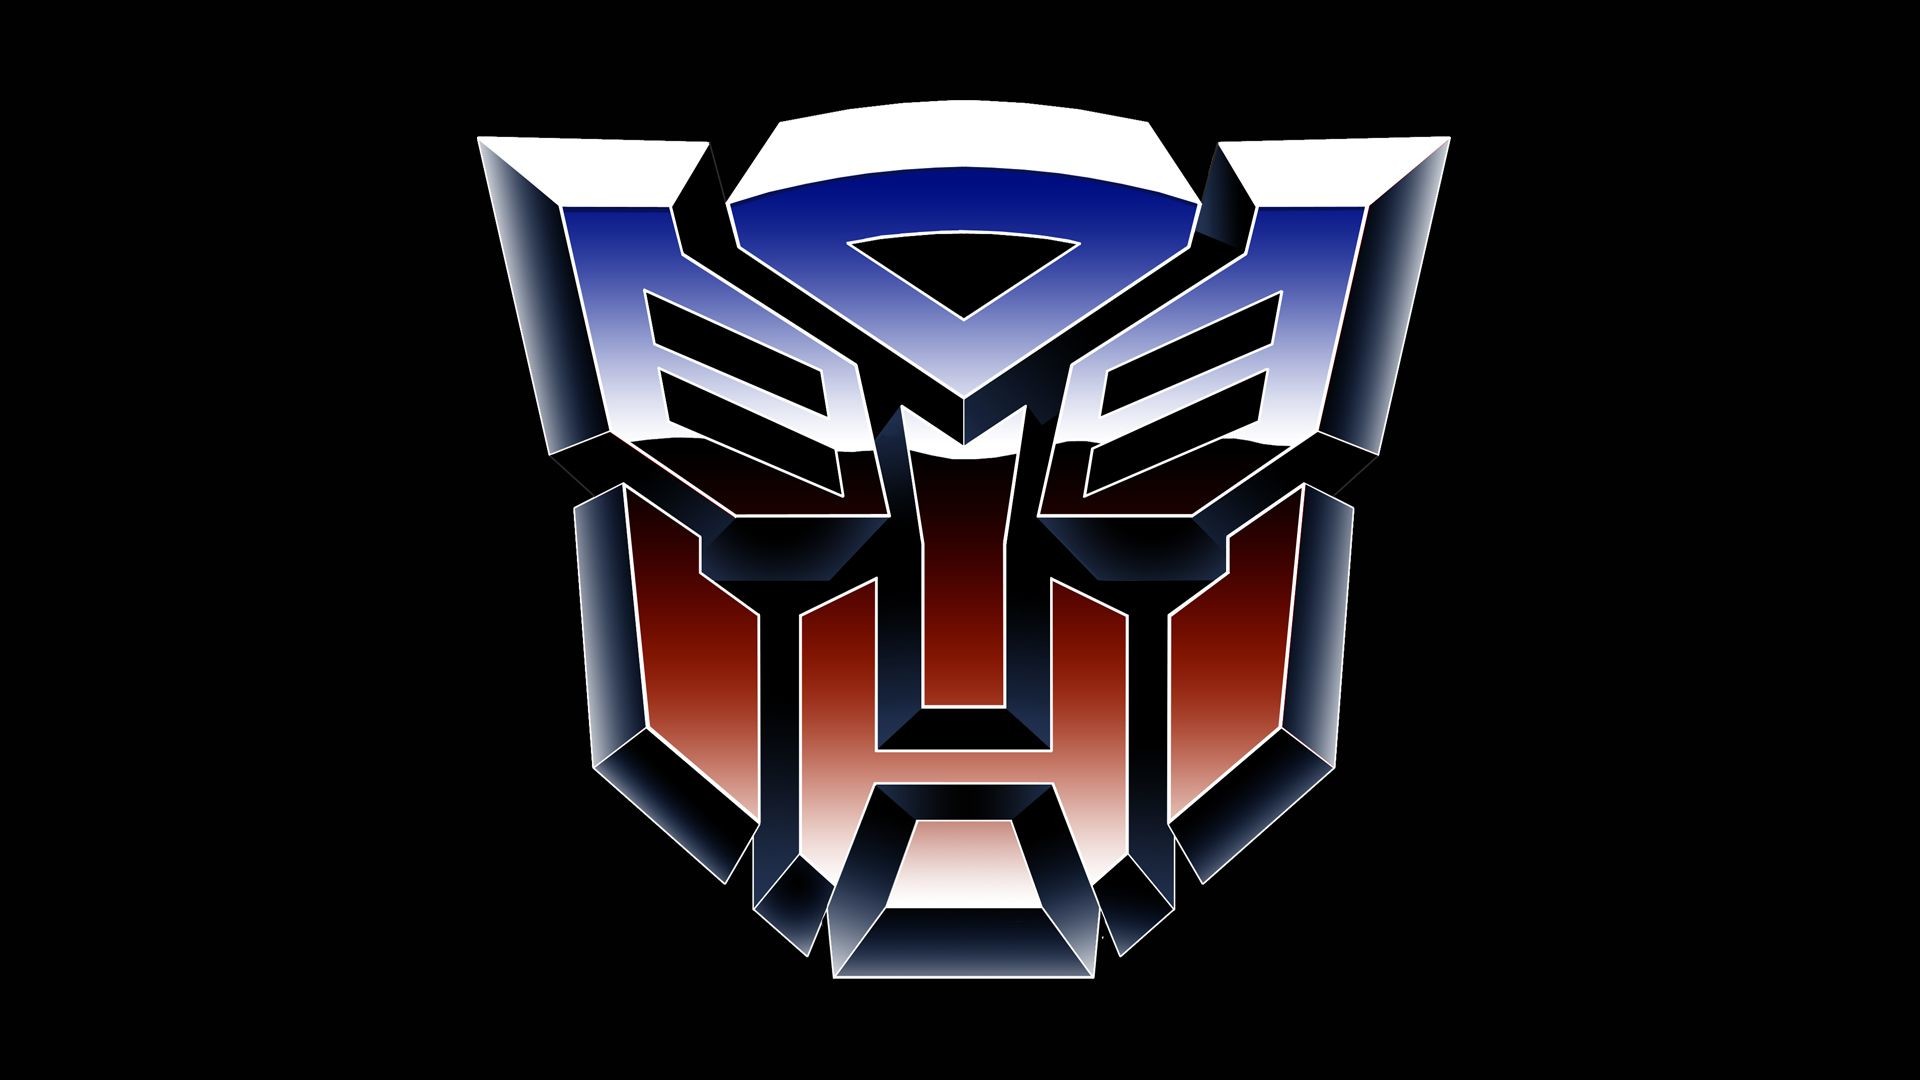 Transformers 4 Autobots Wallpapers | HD Wallpapers Â· autobots-logo-01.jpg  1,920?1,080 ? …